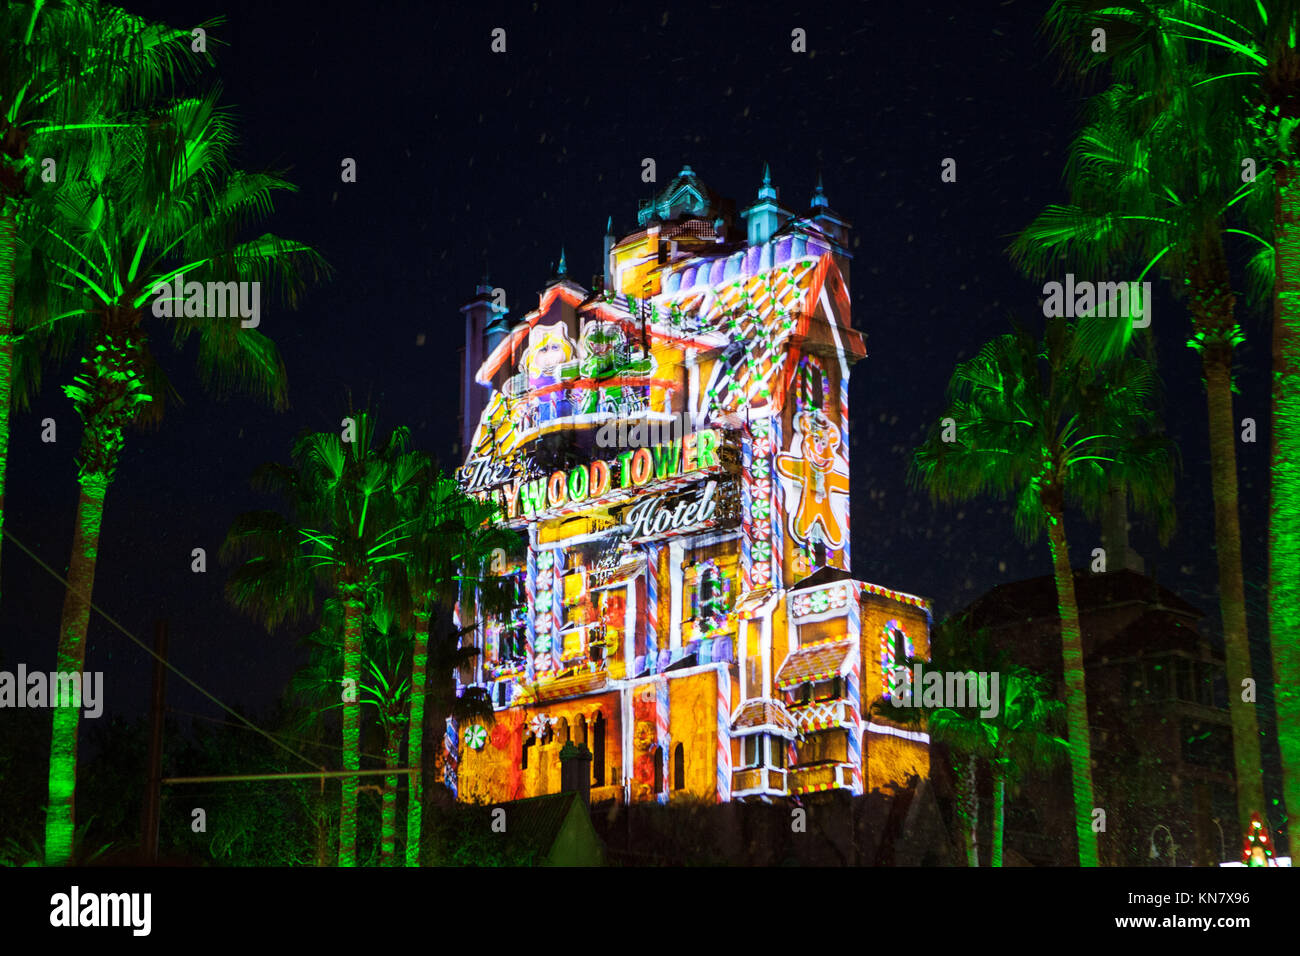 Sunset Season's Greetings, Tower of Terror, Disney's Hollywood Studios, Orlando, Florida Stock Photo